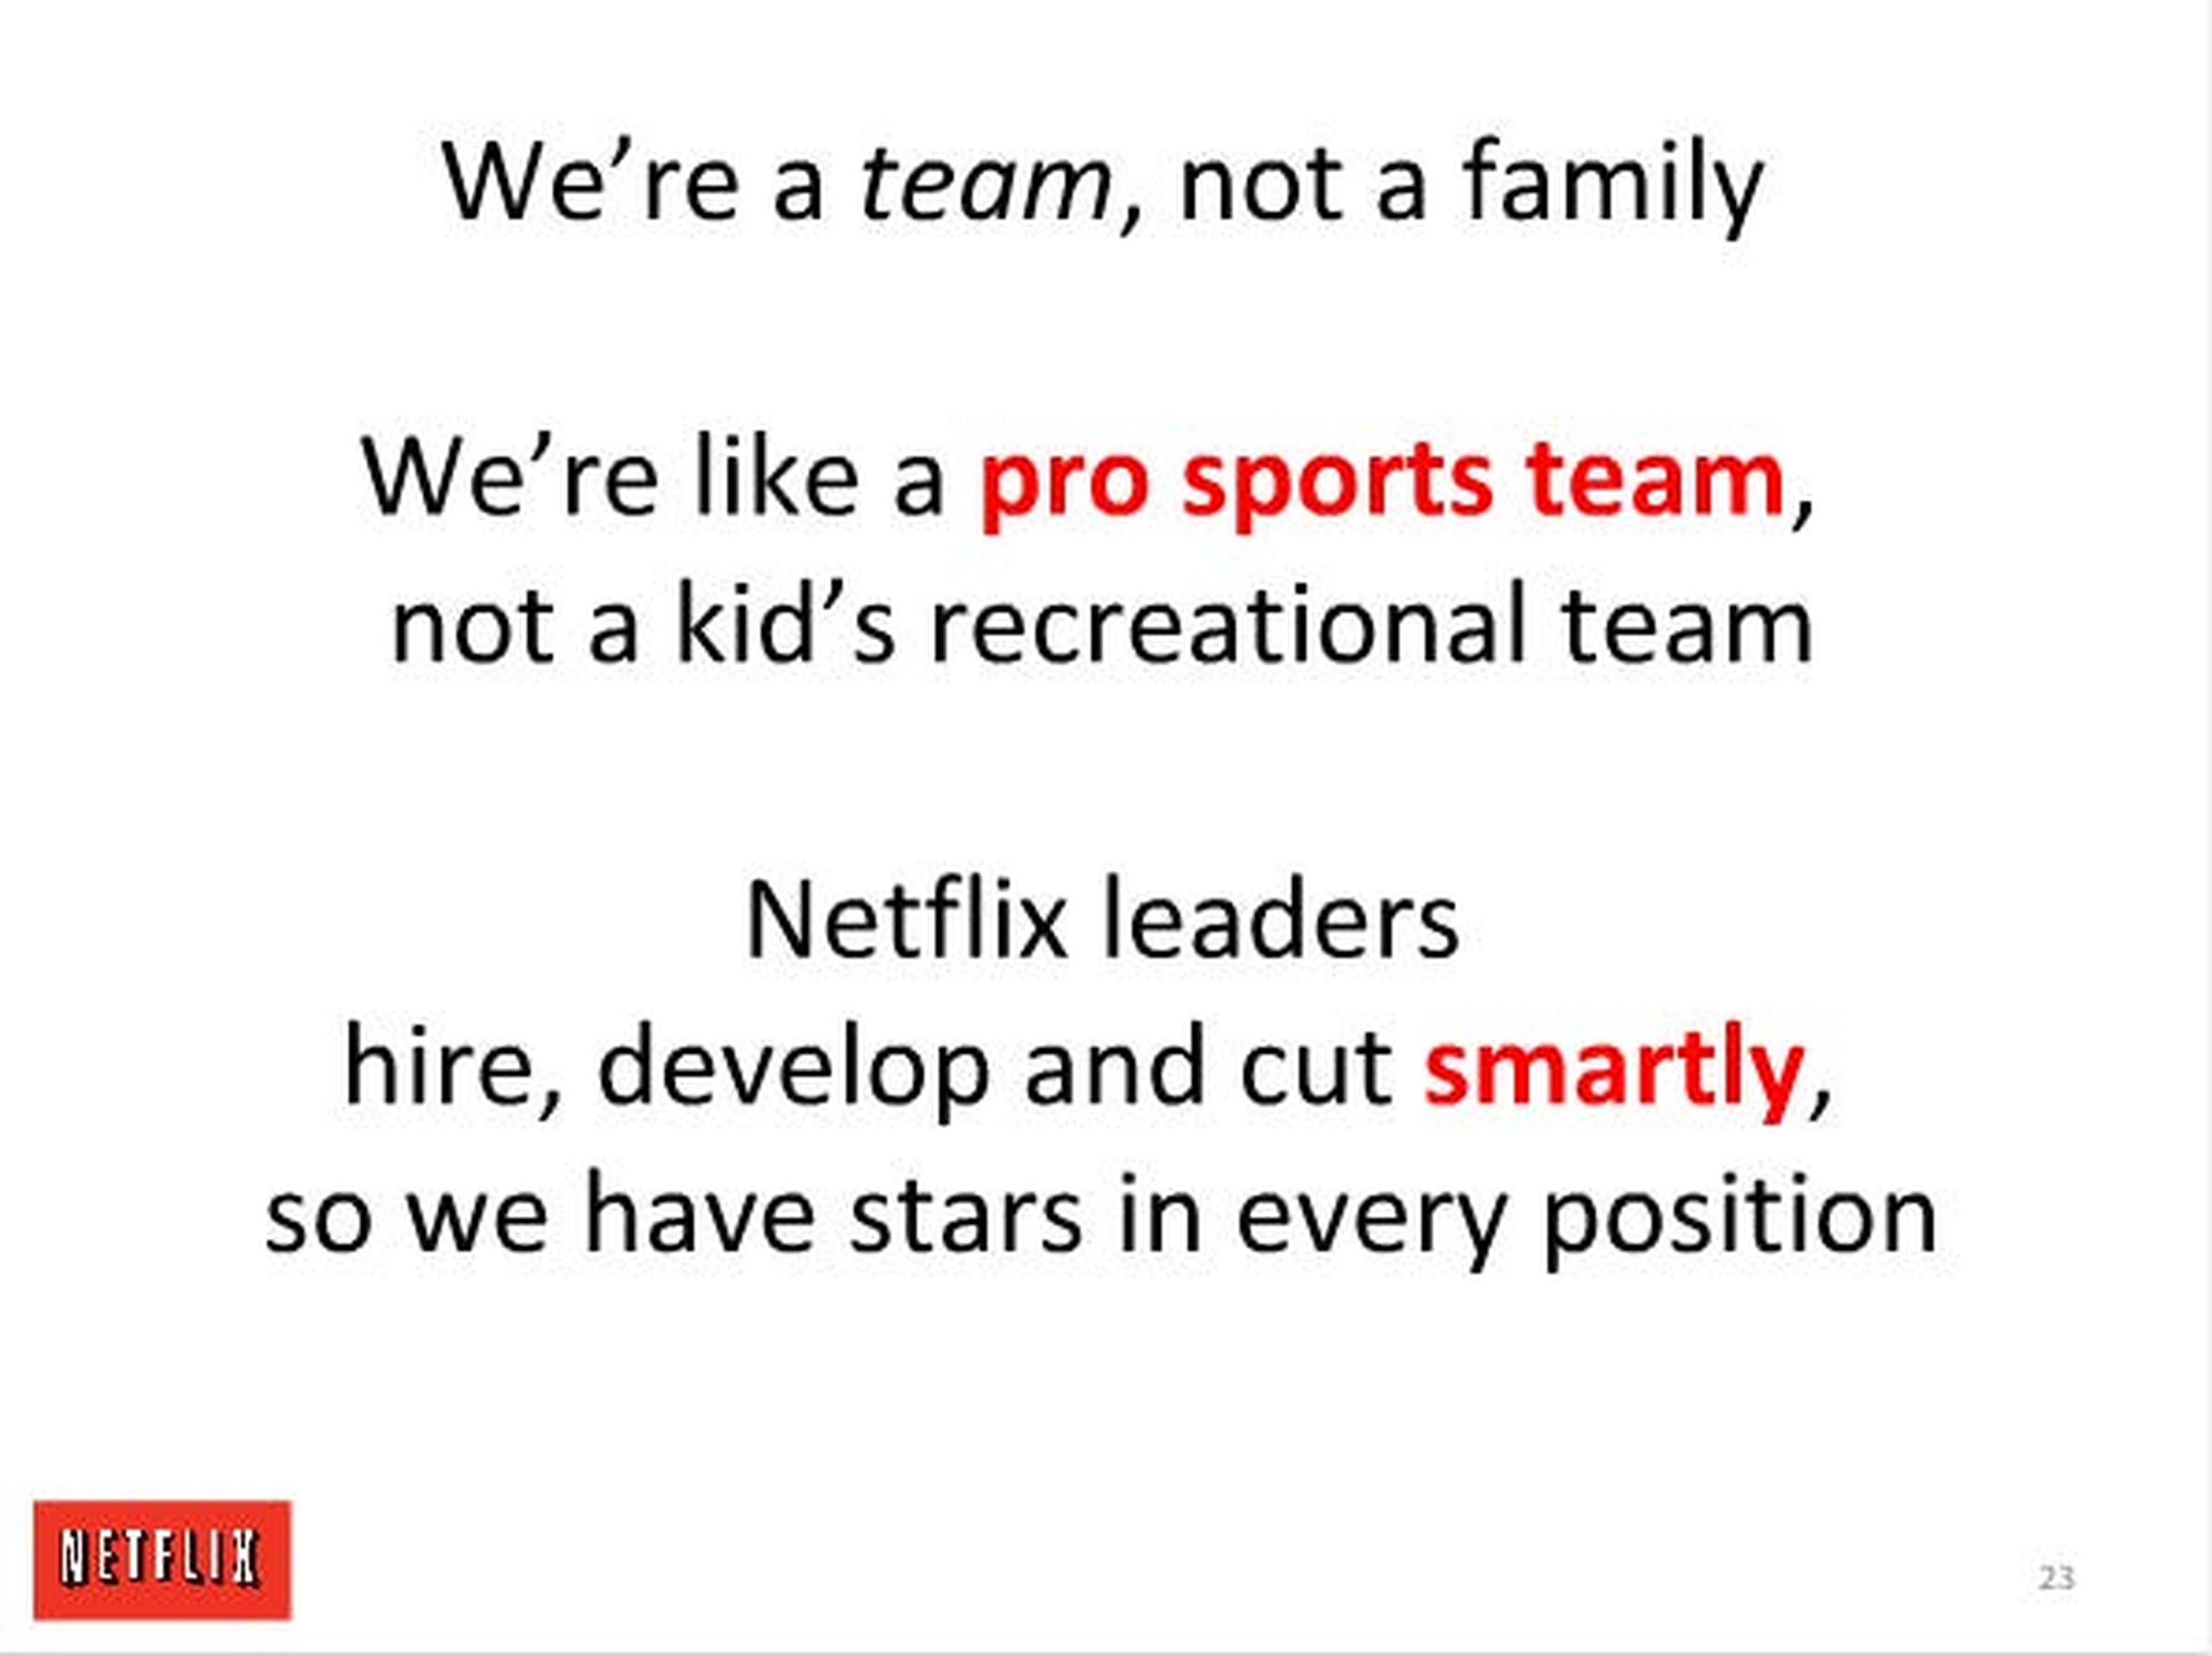 Cultura en Netflix: team, not family